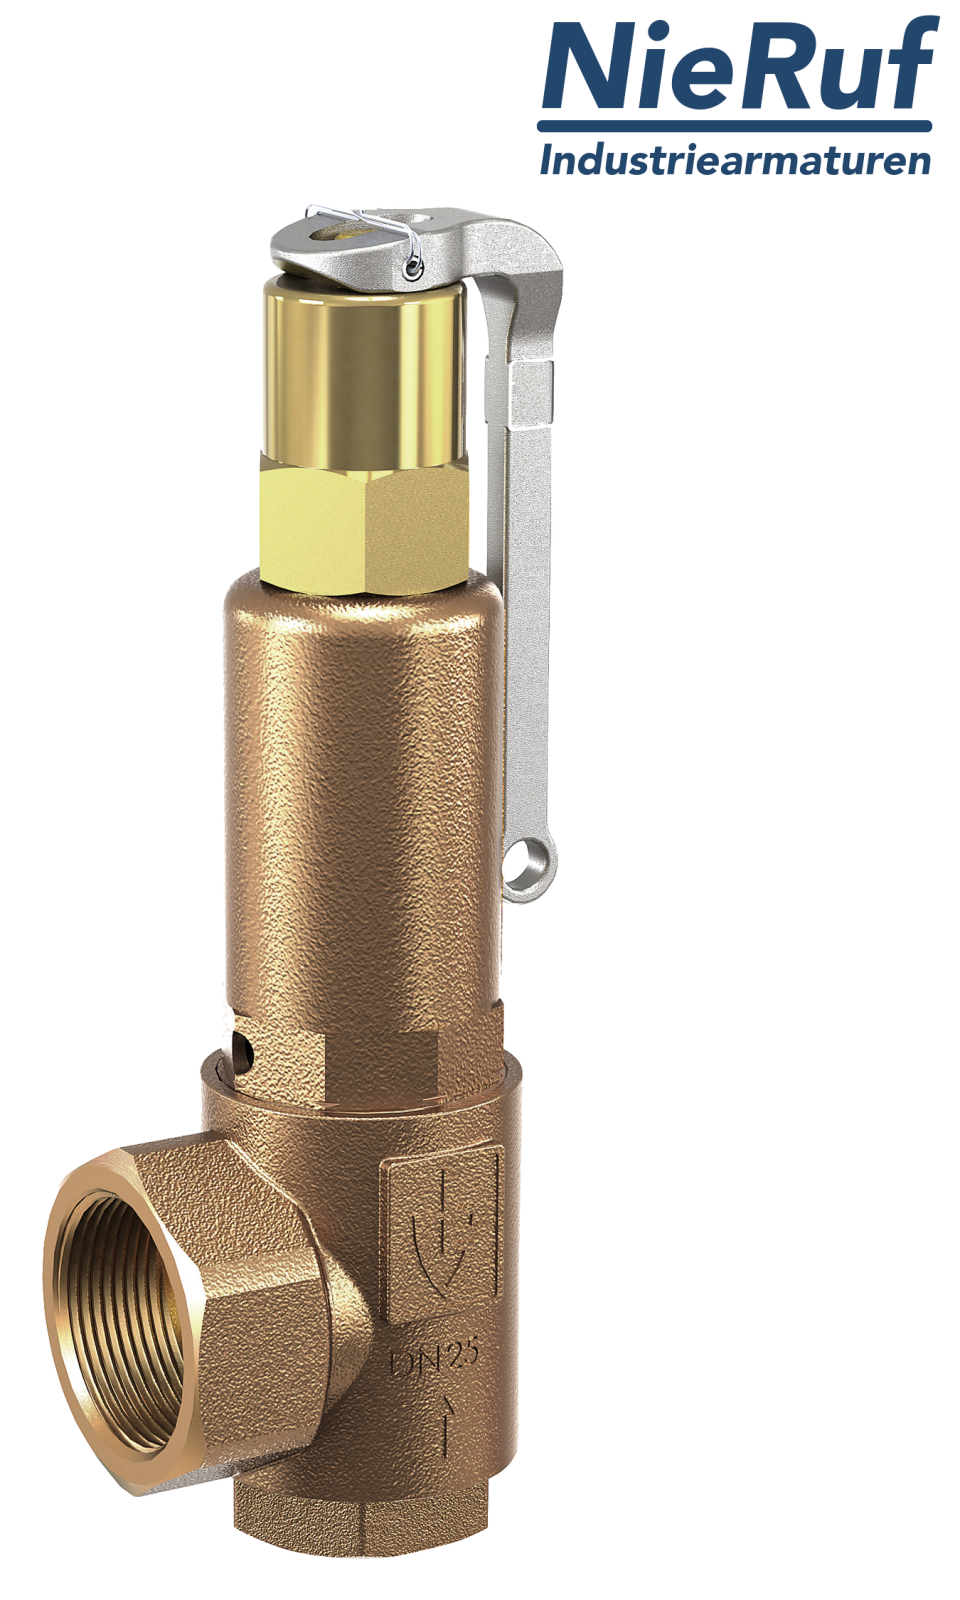 safety valve 2" x 2" fm SV07 neutral gaseous media, gunmetal EPDM, with lever